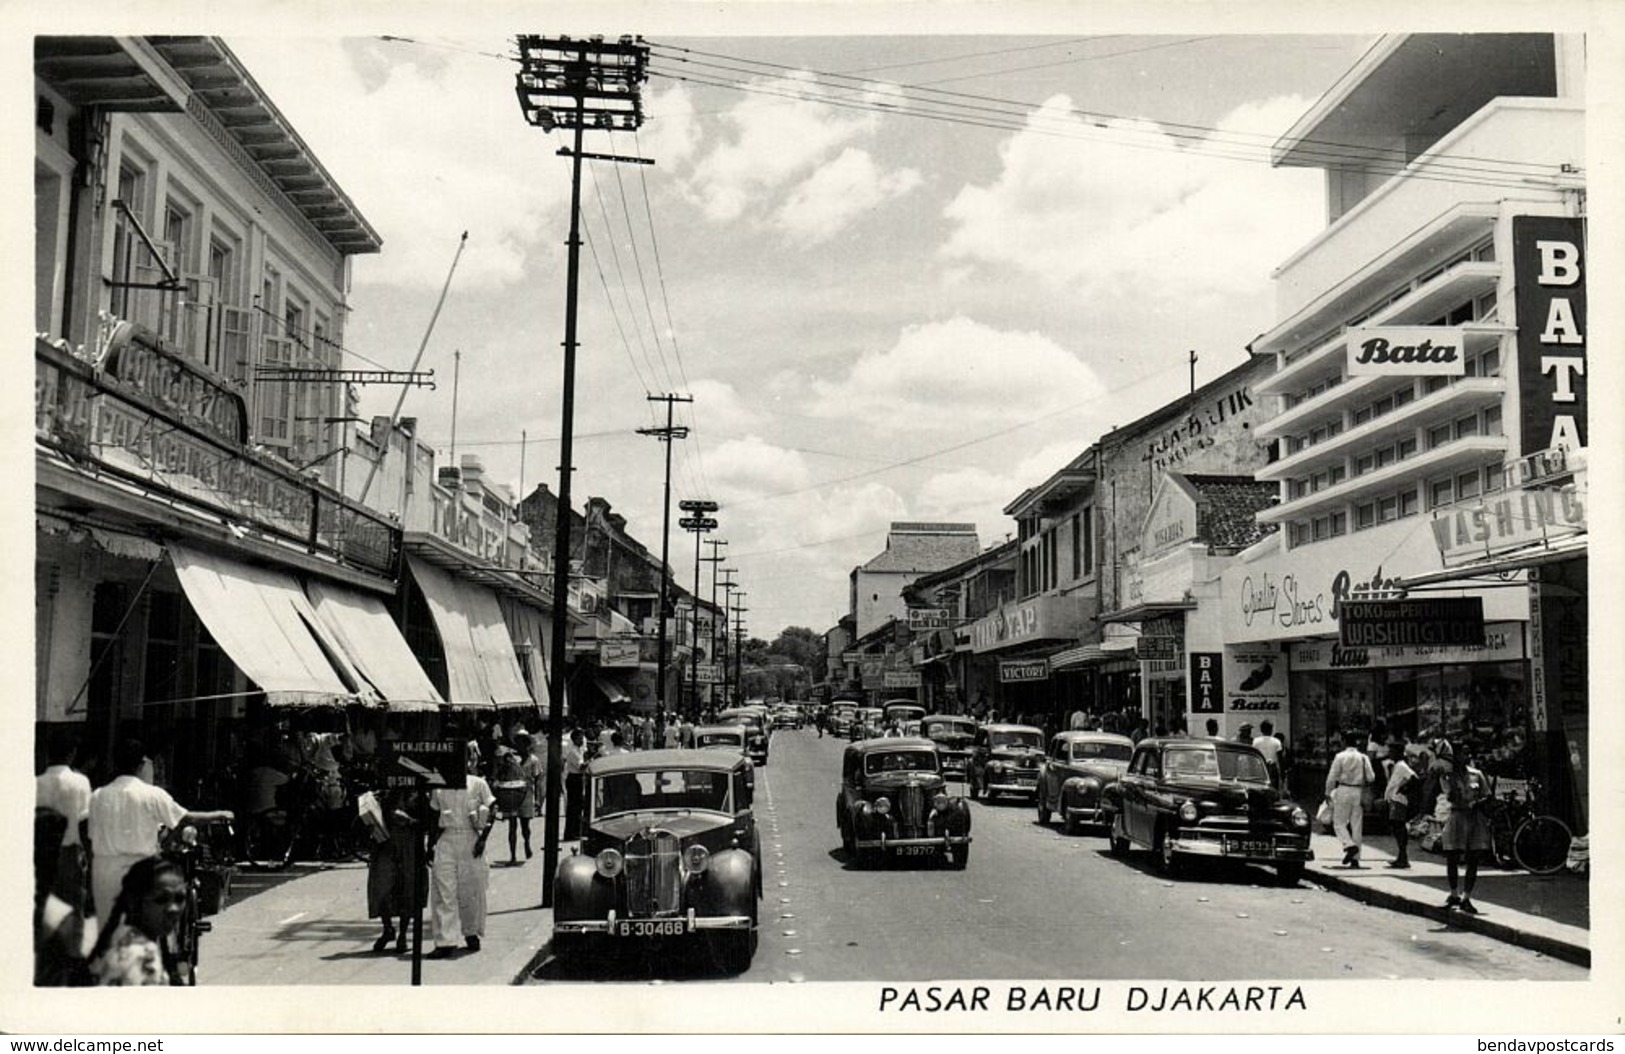 Indonesia, JAVA JAKARTA, Pasar Baru, Cars (1950s) RPPC Postcard - Indonesia